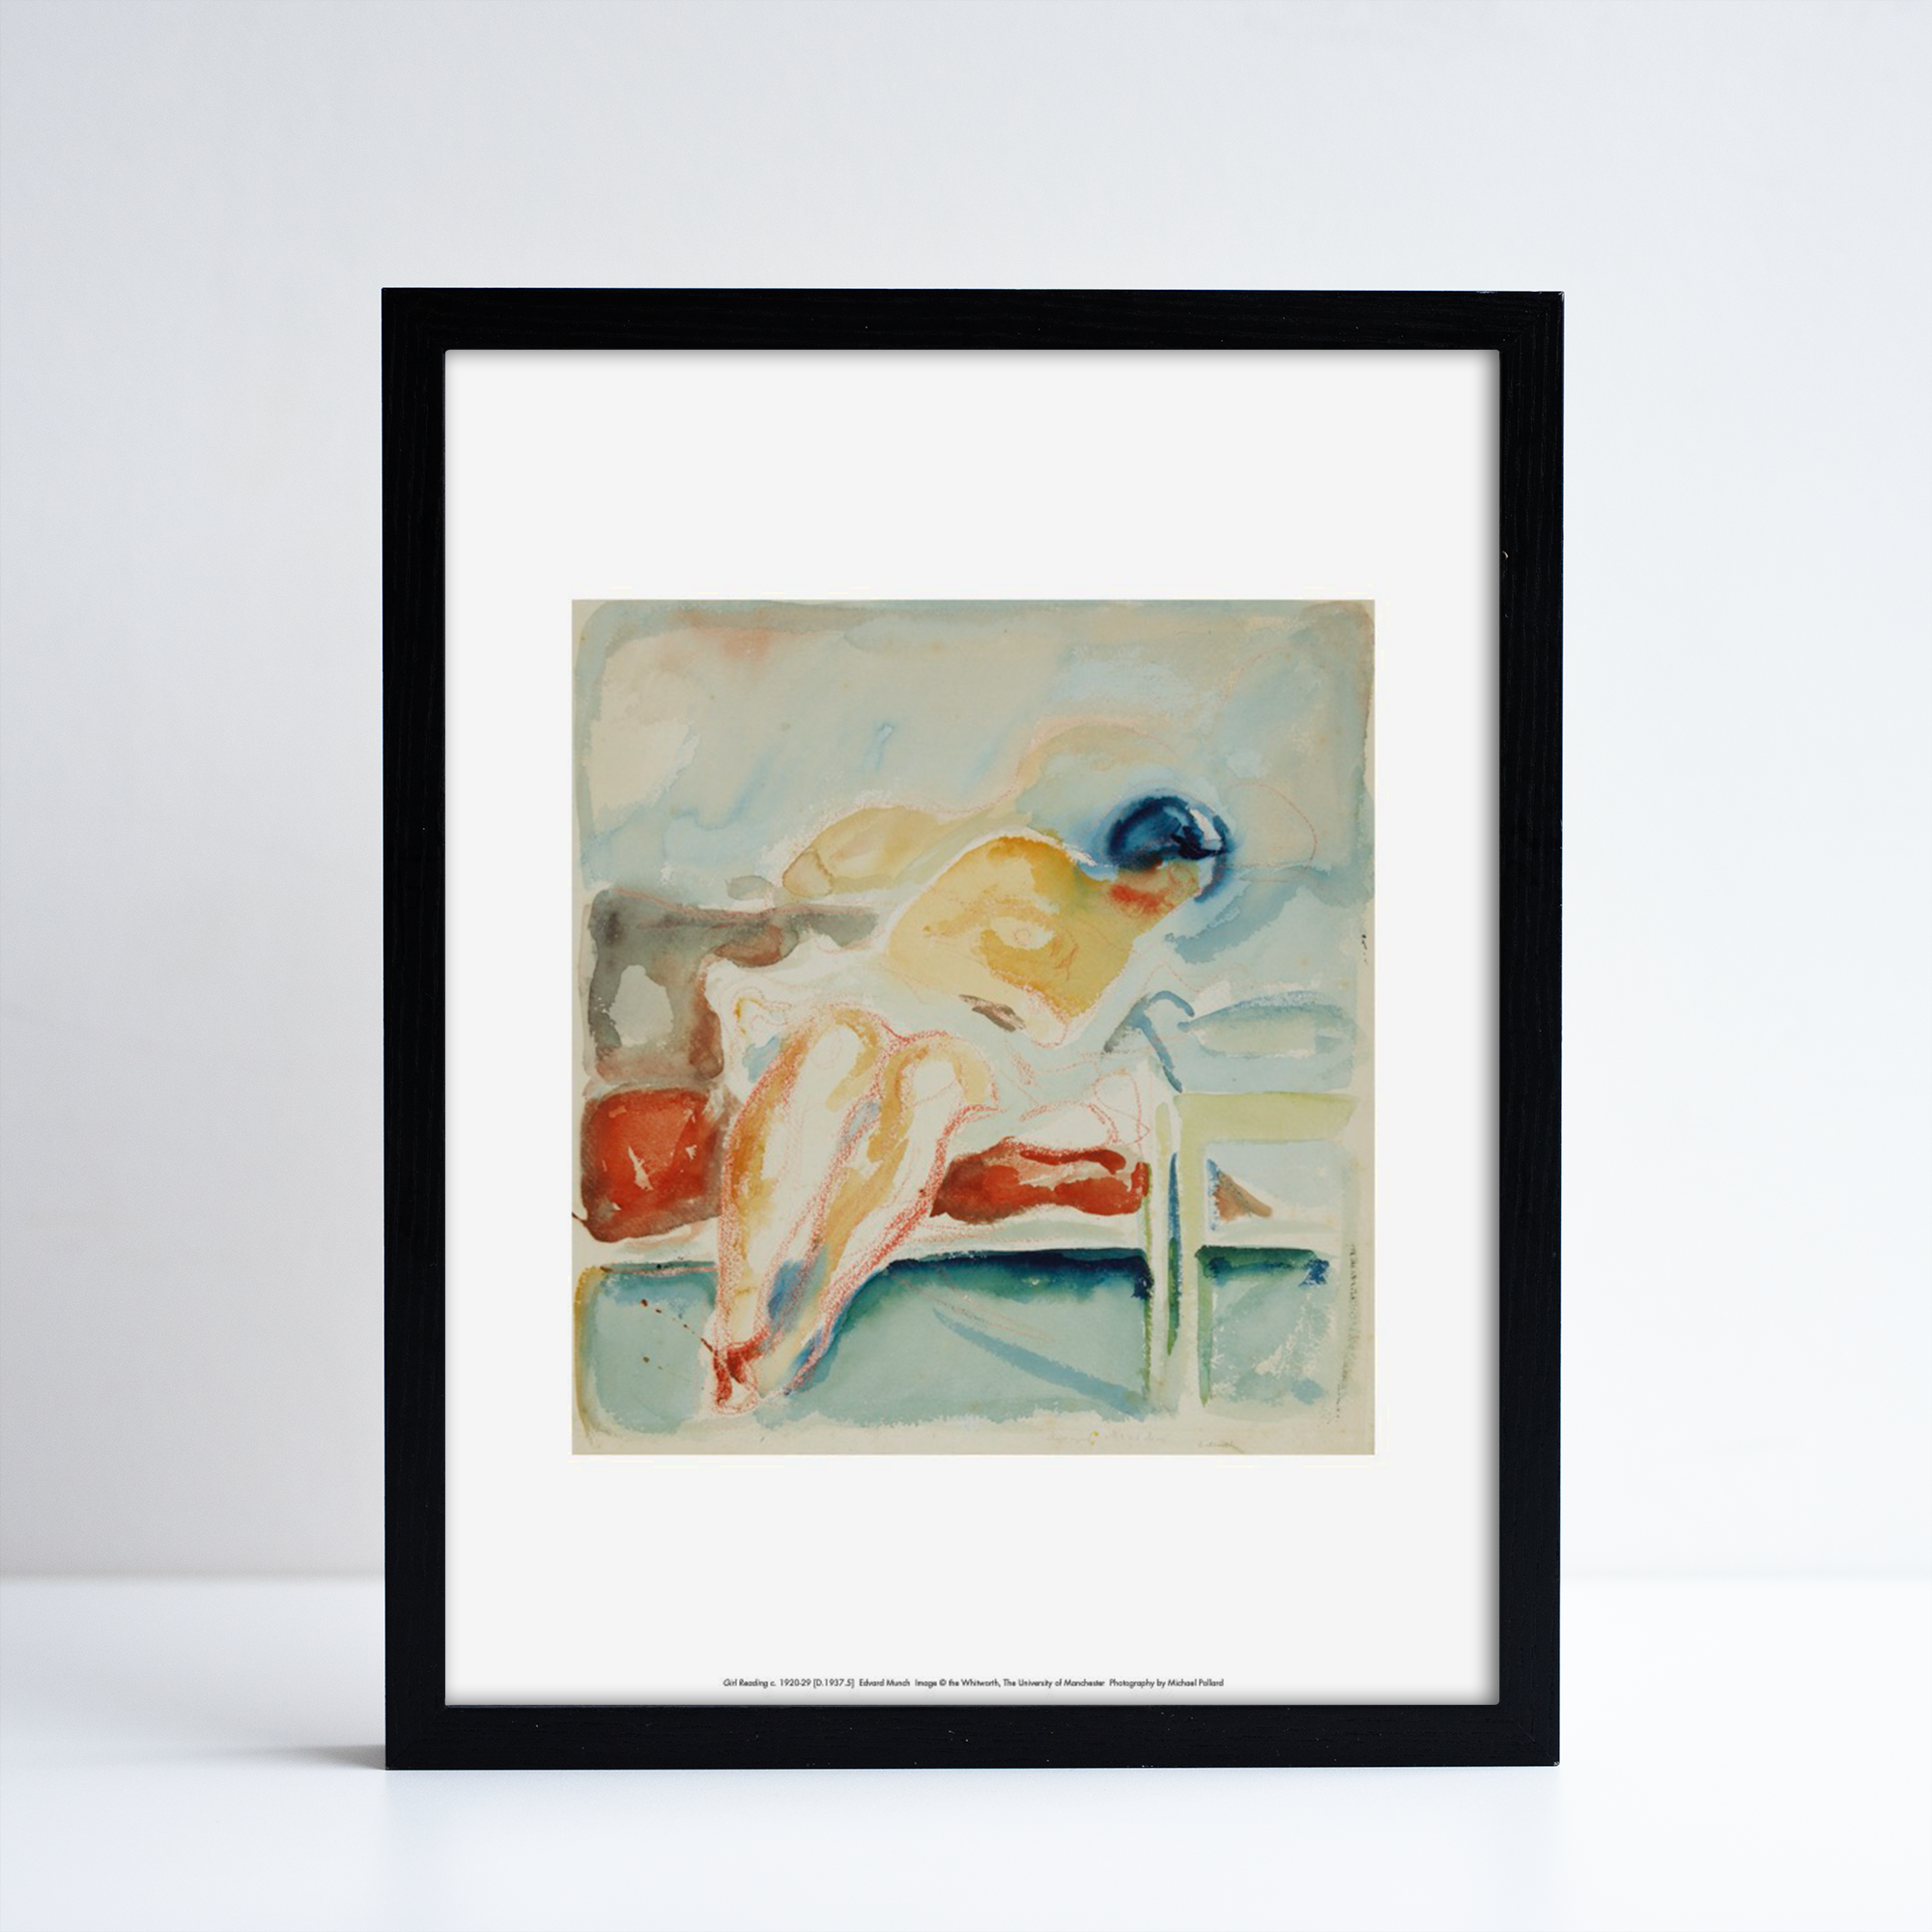 Framed Reproduction of 'Girl Reading' by Edvard Munch. 